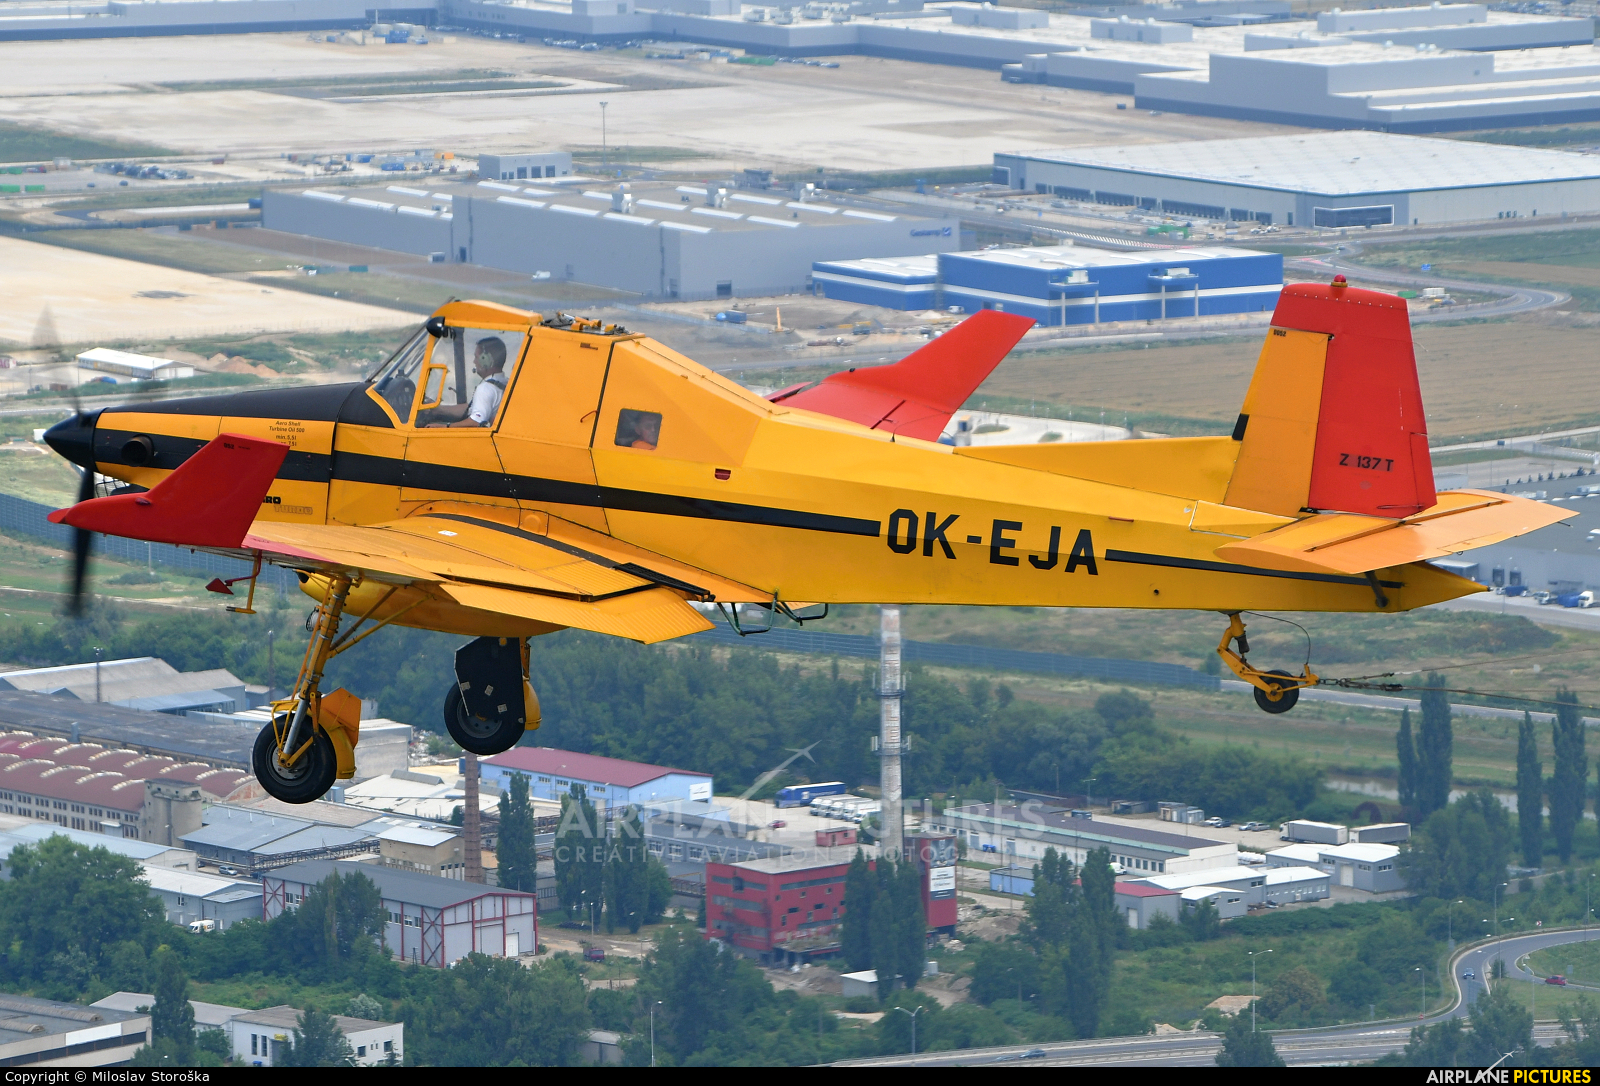 Agroair OK-EJA aircraft at In Flight - Slovakia